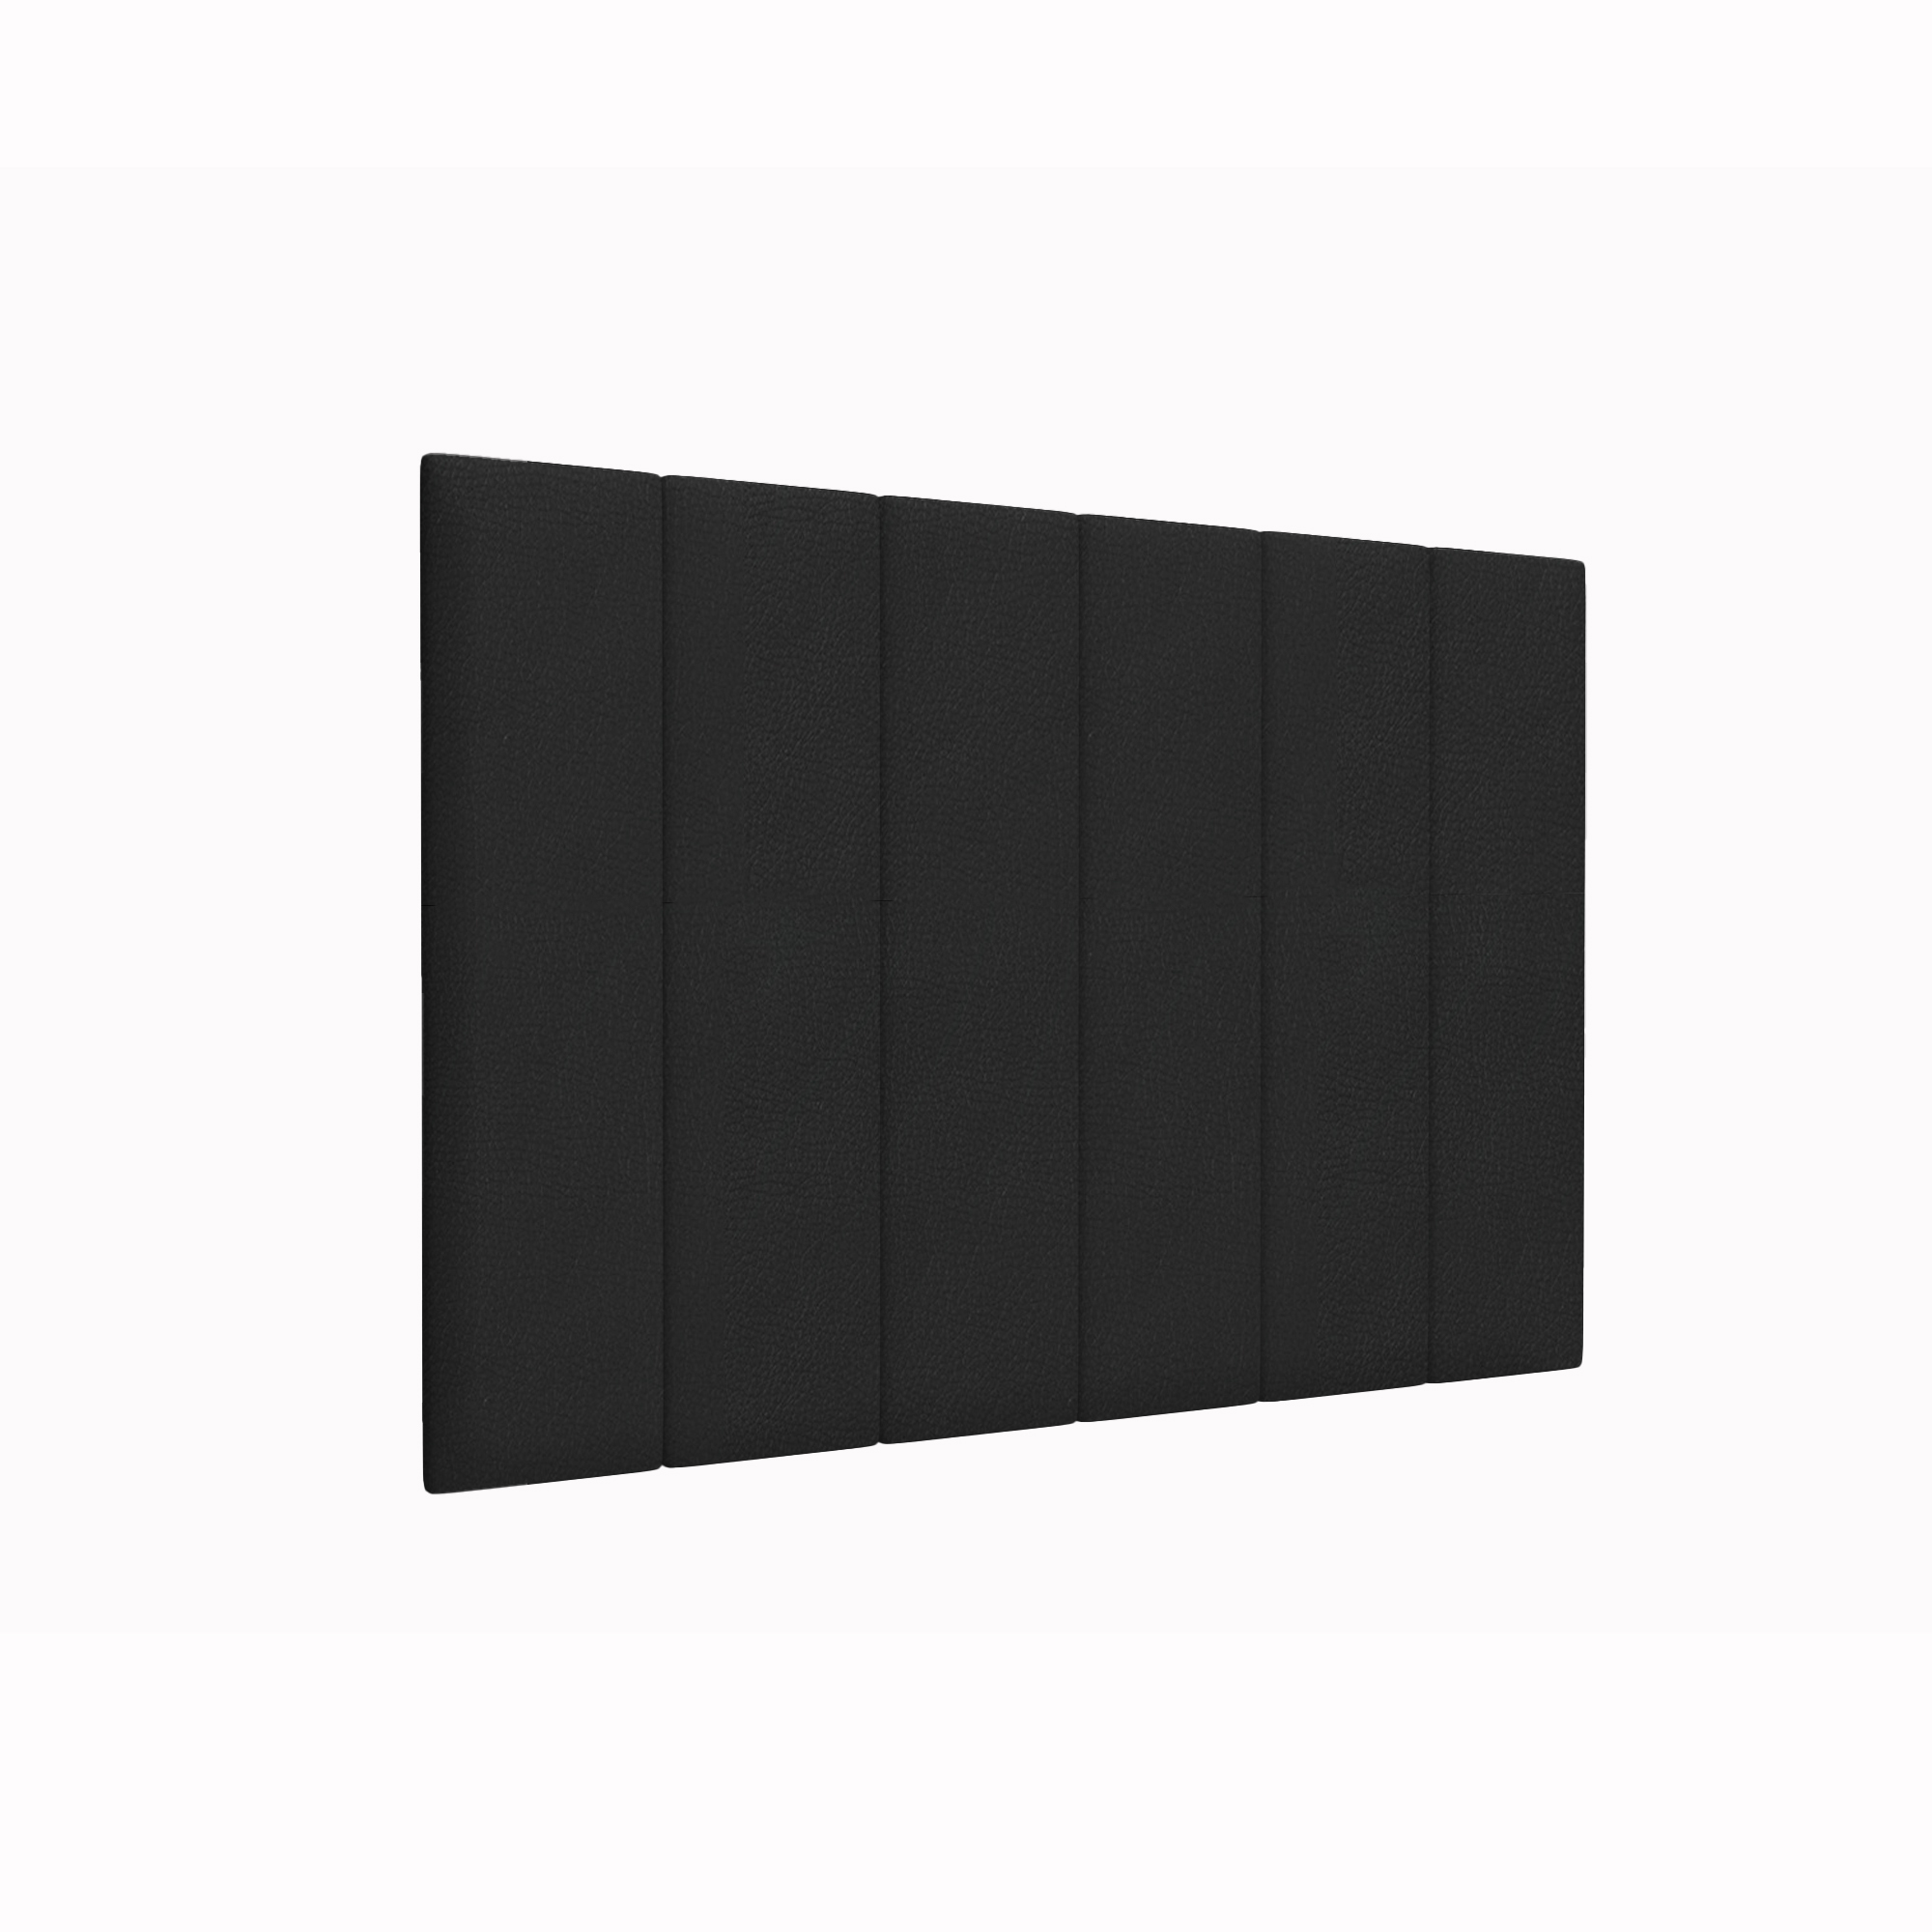 Мягкие стеновые панели Eco Leather Black 20х80 см 4 шт.